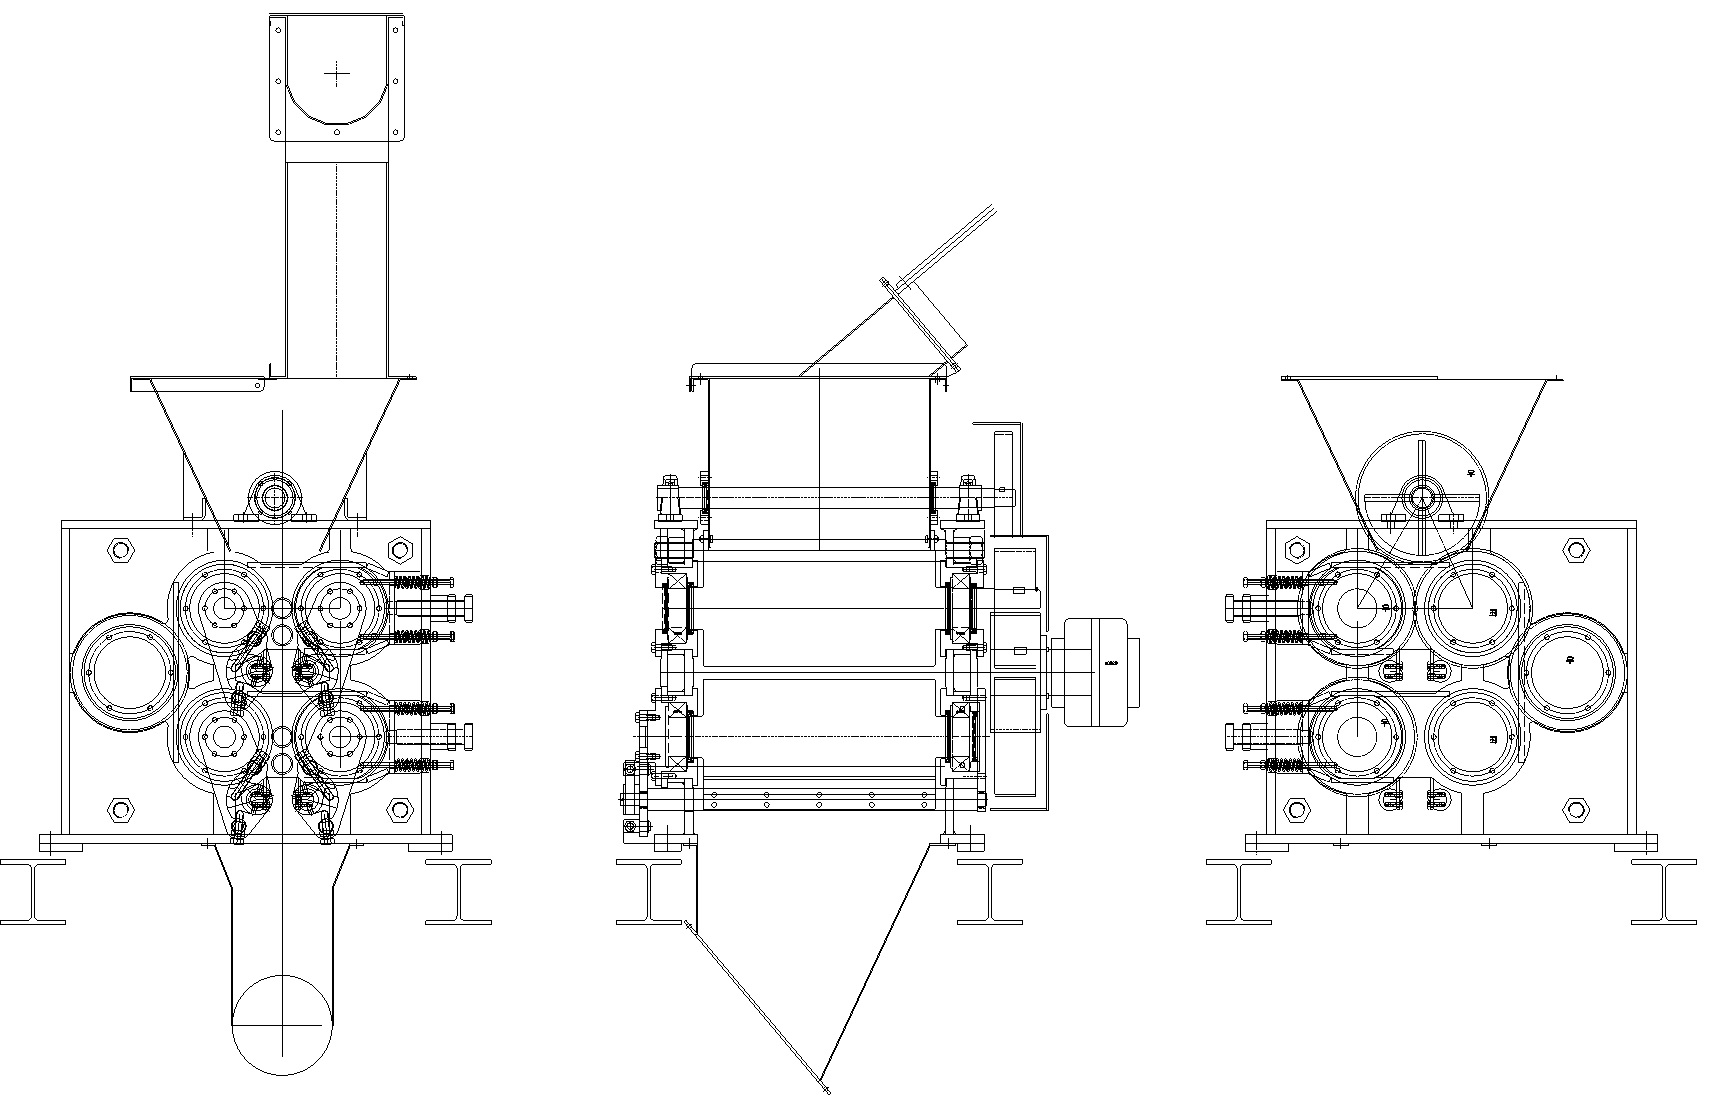 CAD for compressor prototype